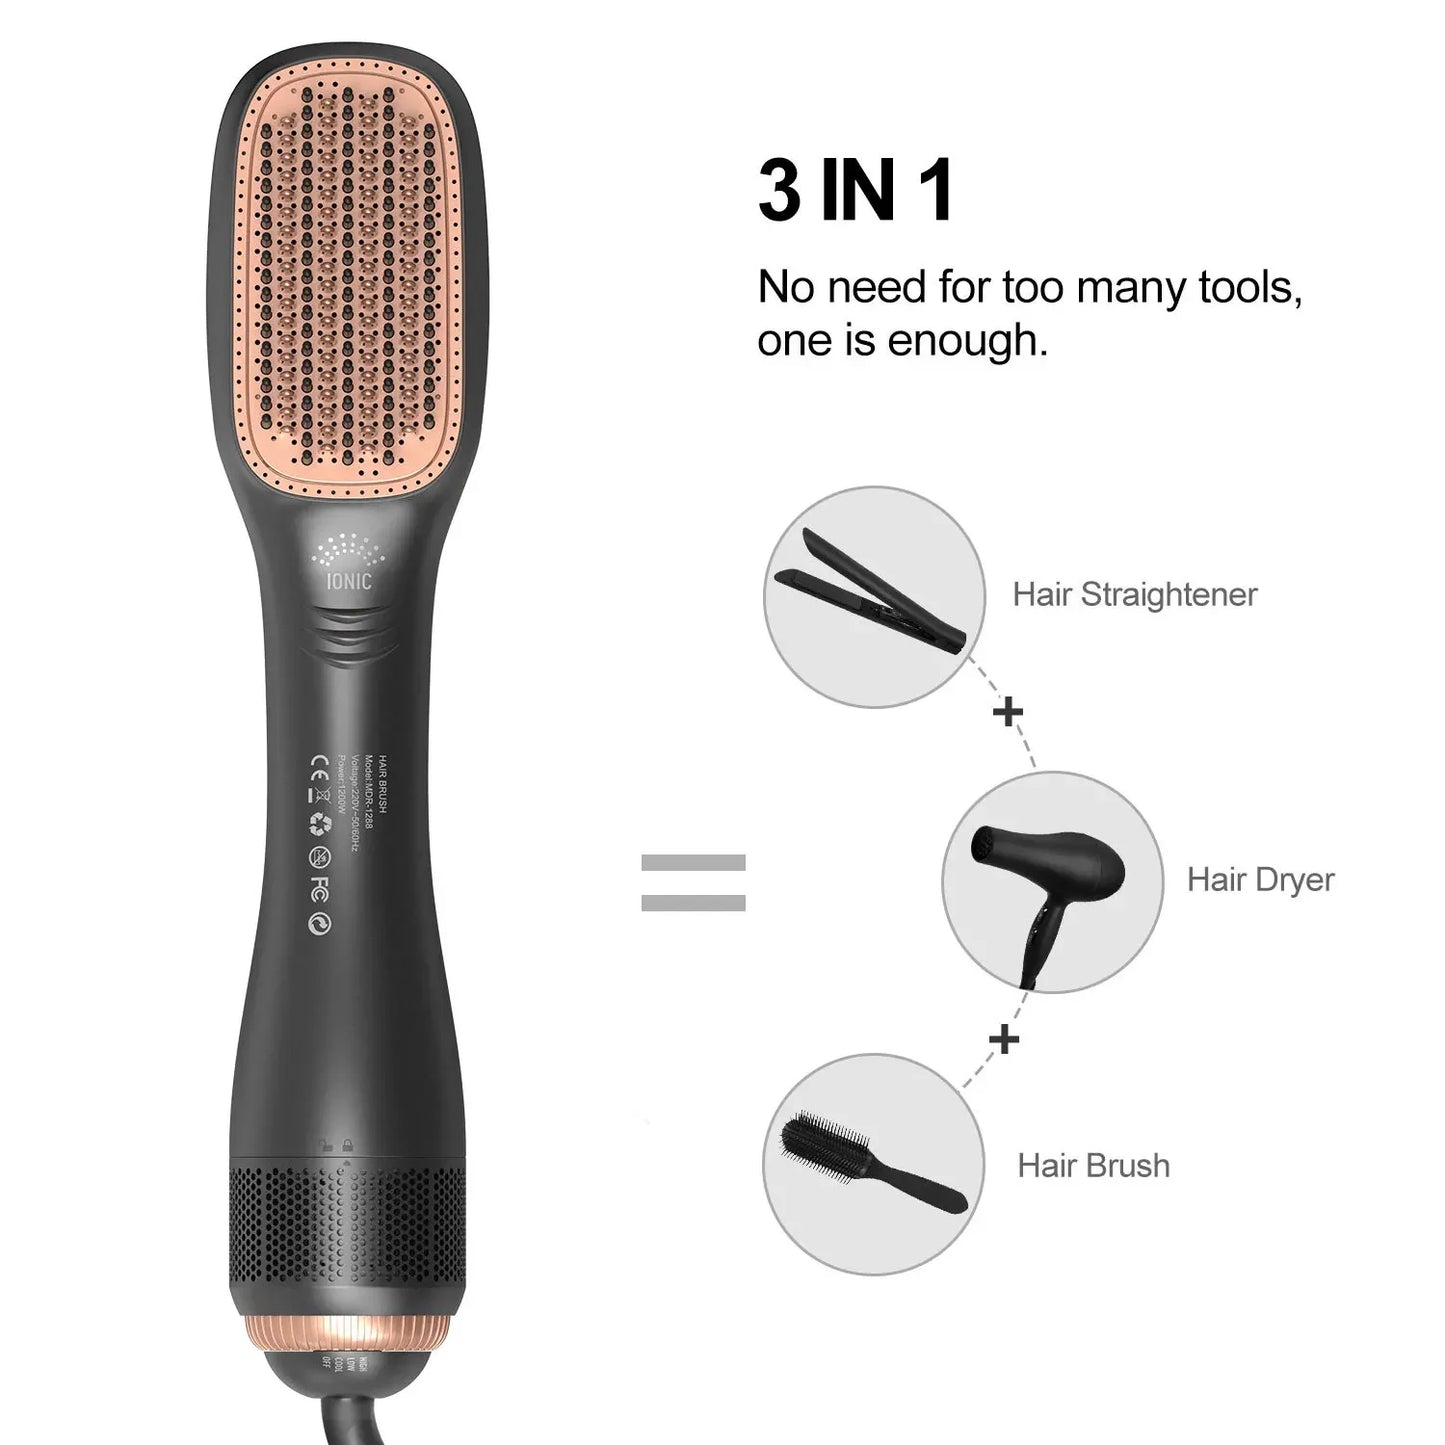 3 In 1 Hairdryer Brush
Overheating Protection Negative Ion Hair Straightener
Fast Heating Lightweight Hair Straightening Tool